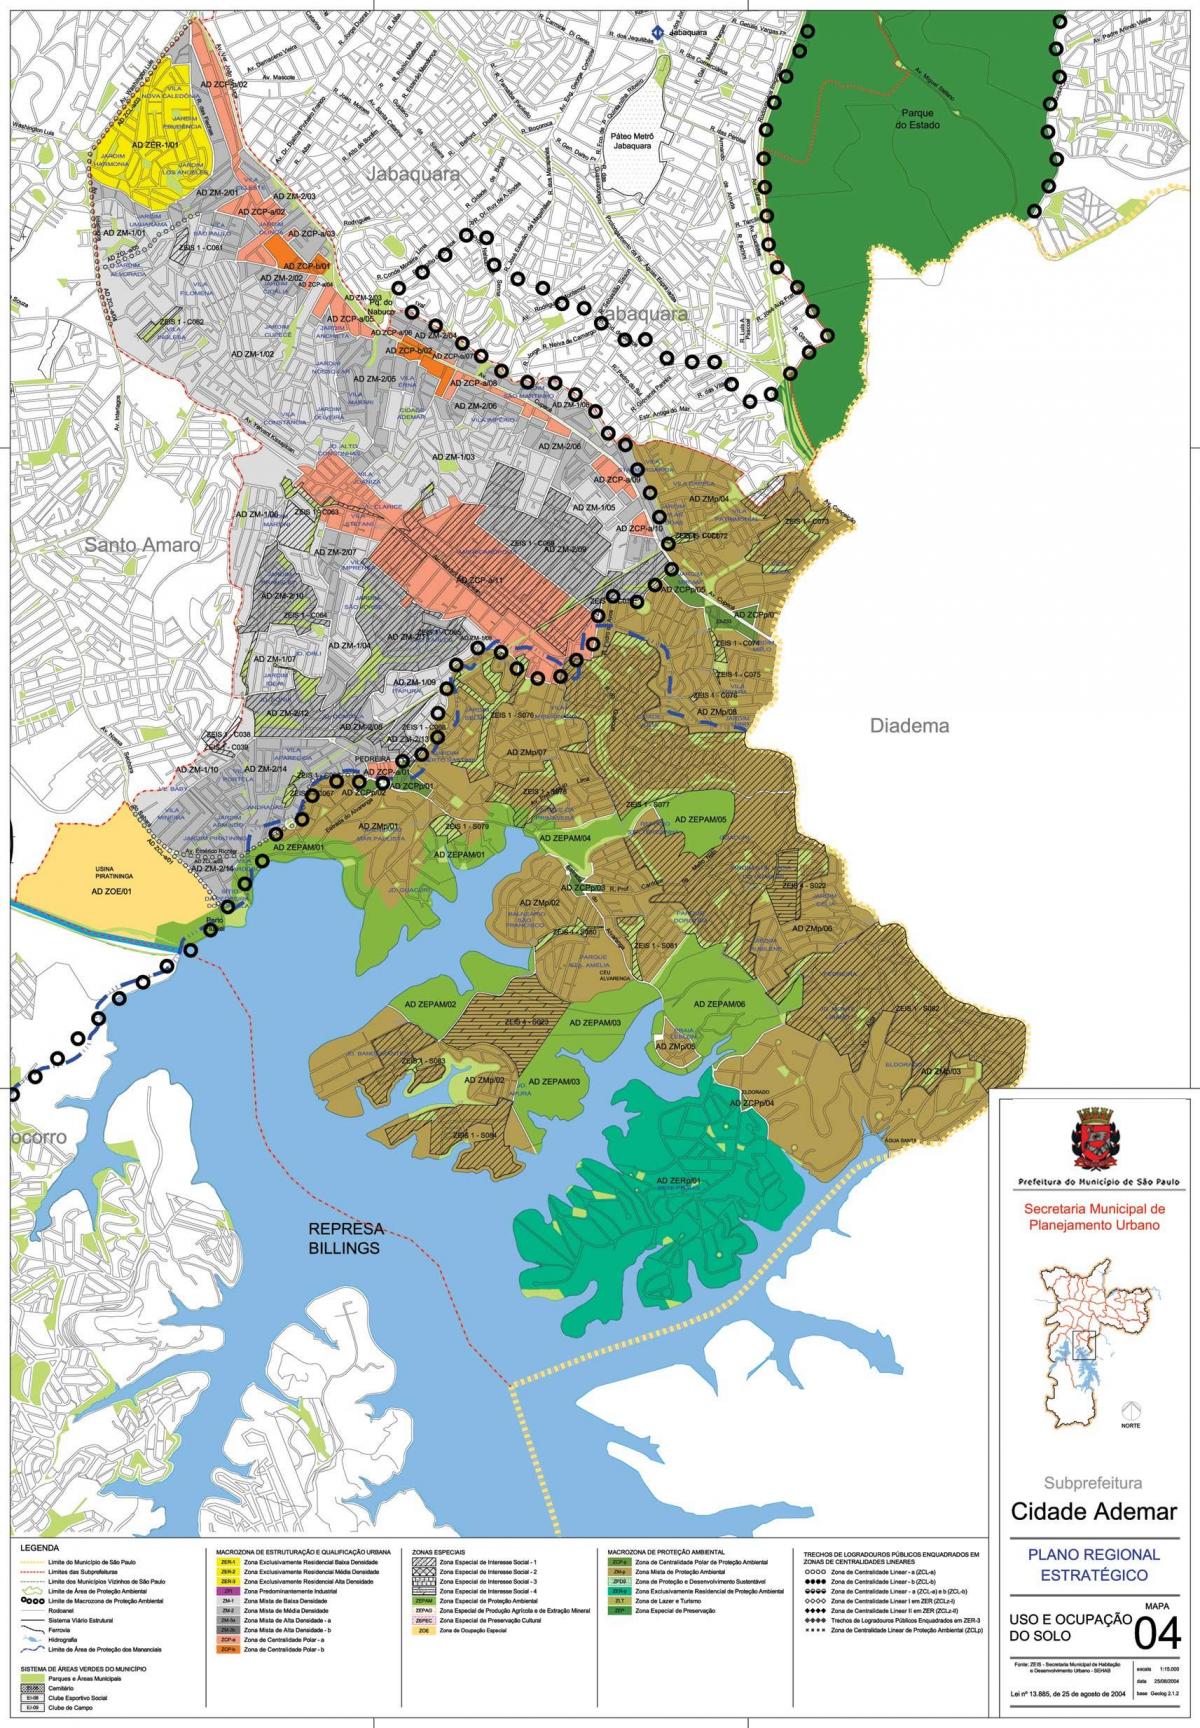 Карта на Cidade Ademar São Паоло - Окупацијата на почвата